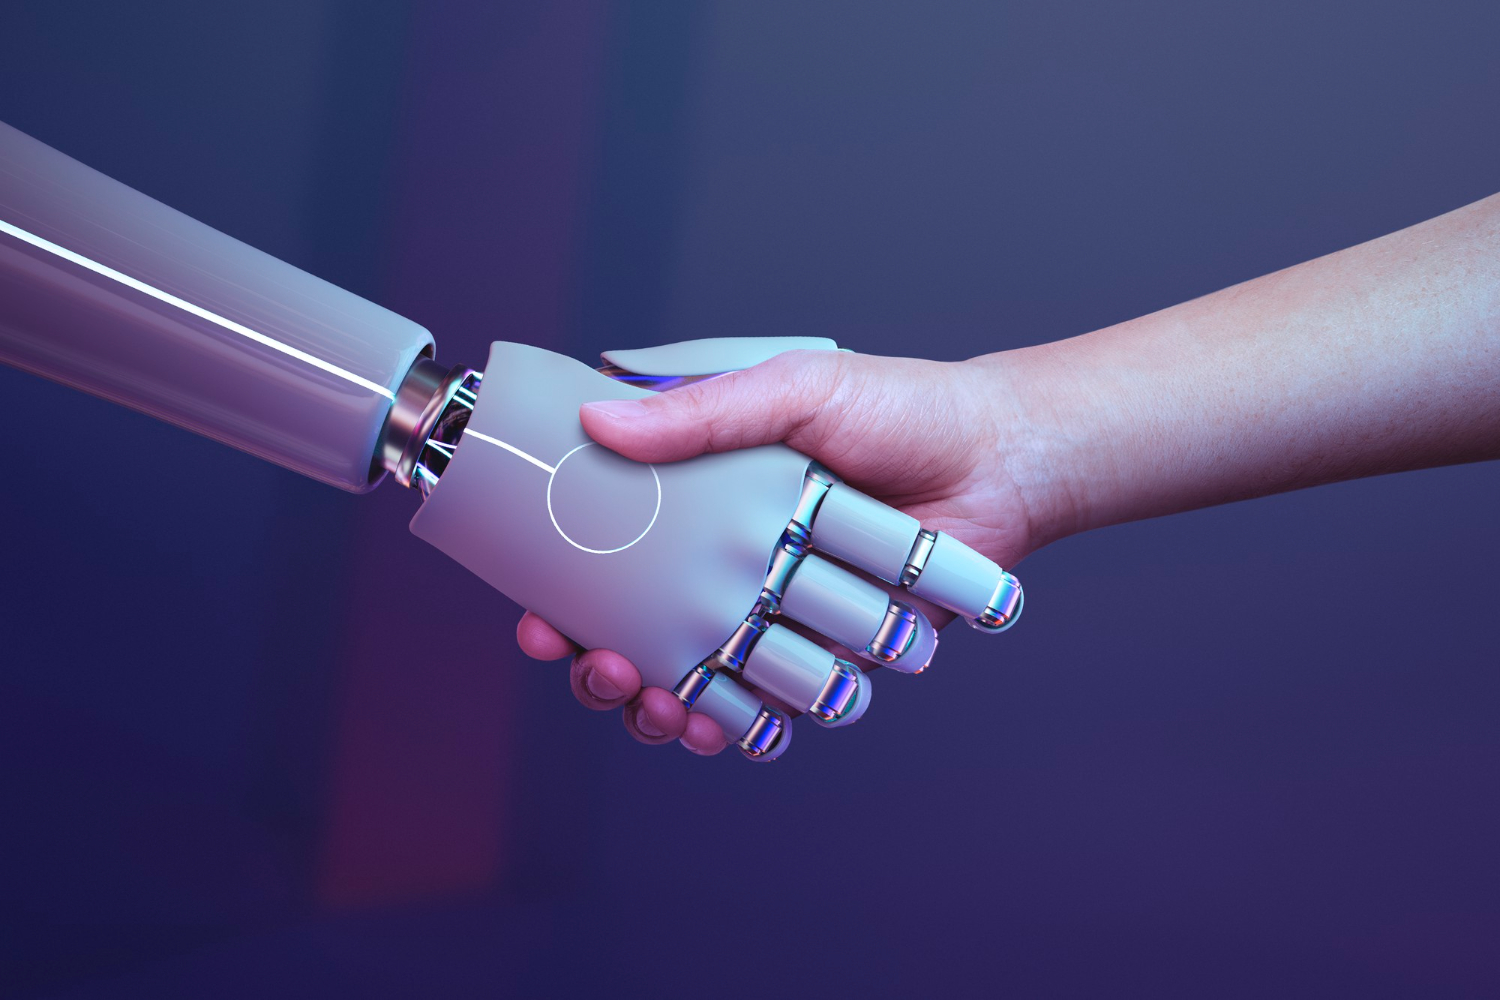 A handshake between an artificial hand, and a human hand